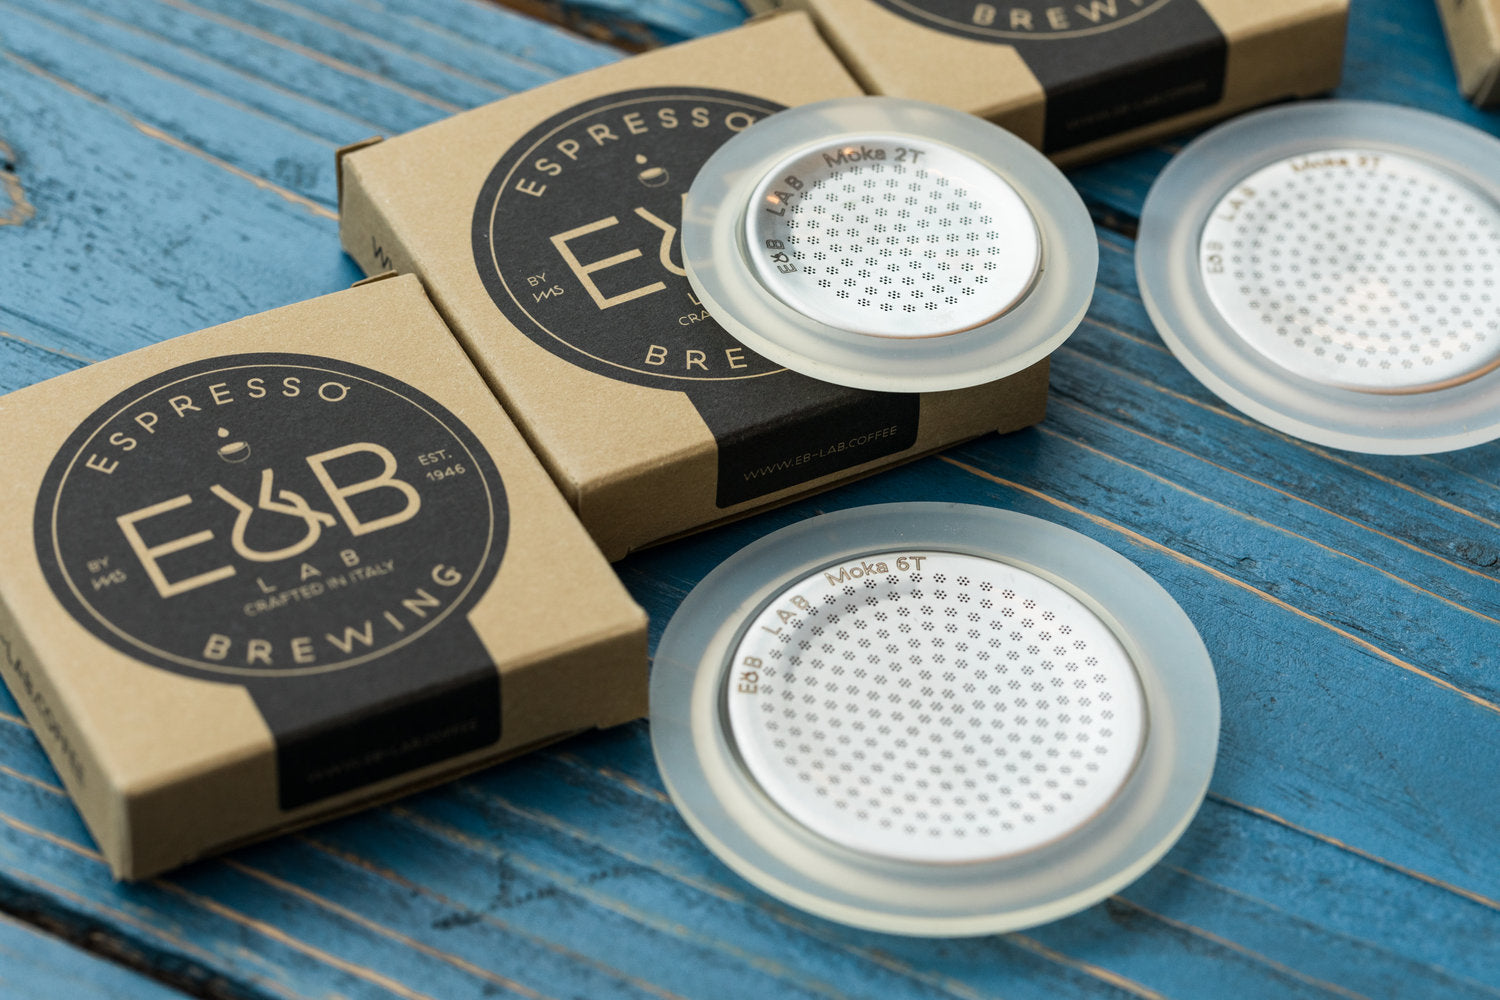 E&B Lab Competition Moka Pot Filter – Whole Latte Love